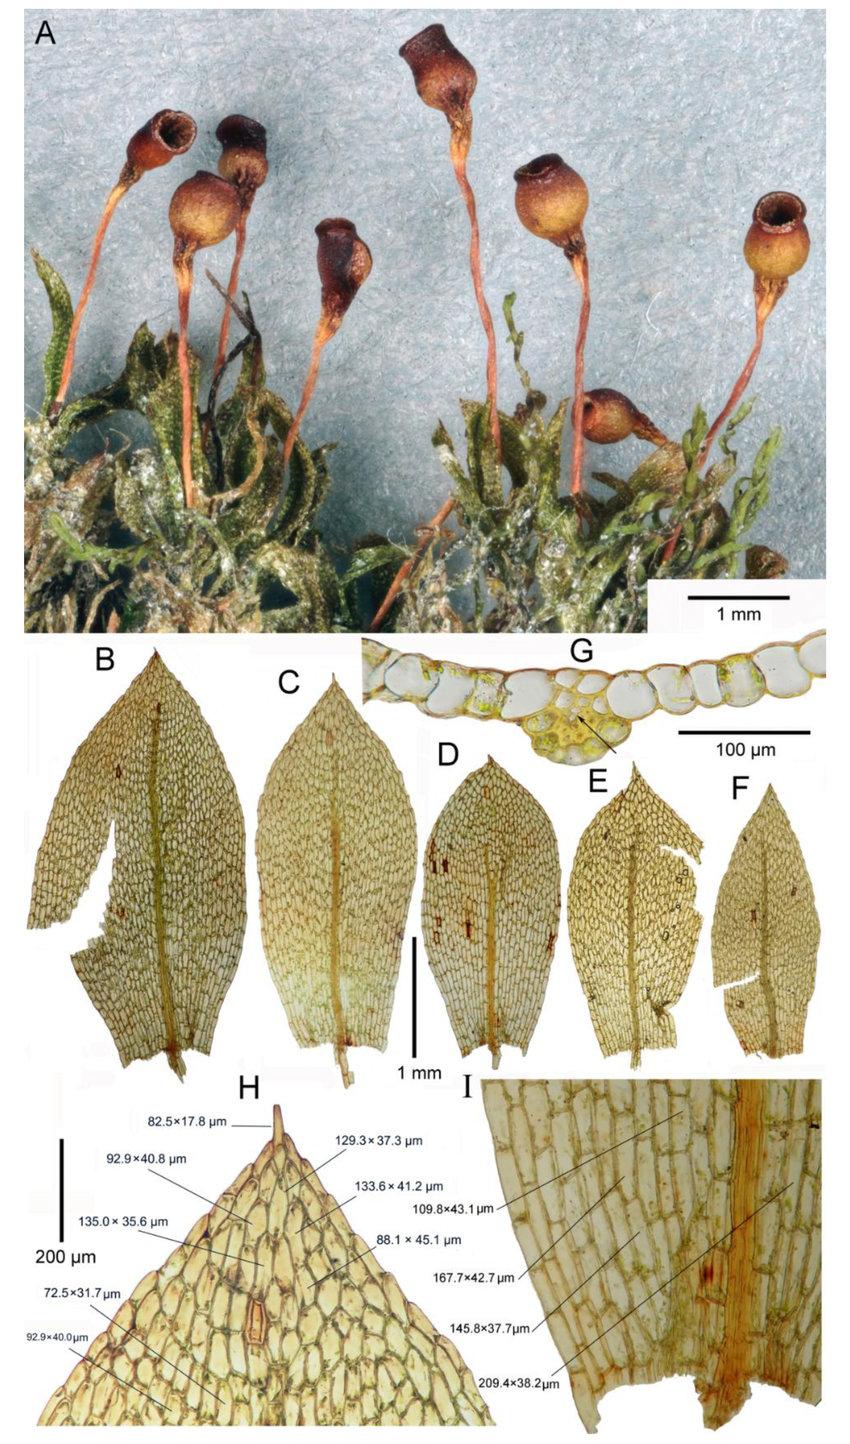 Entosthodon-elimbatus-WZ-Ma-Shevock-S-He-A-dry-plants-with-sporophytes-B-C.jpg